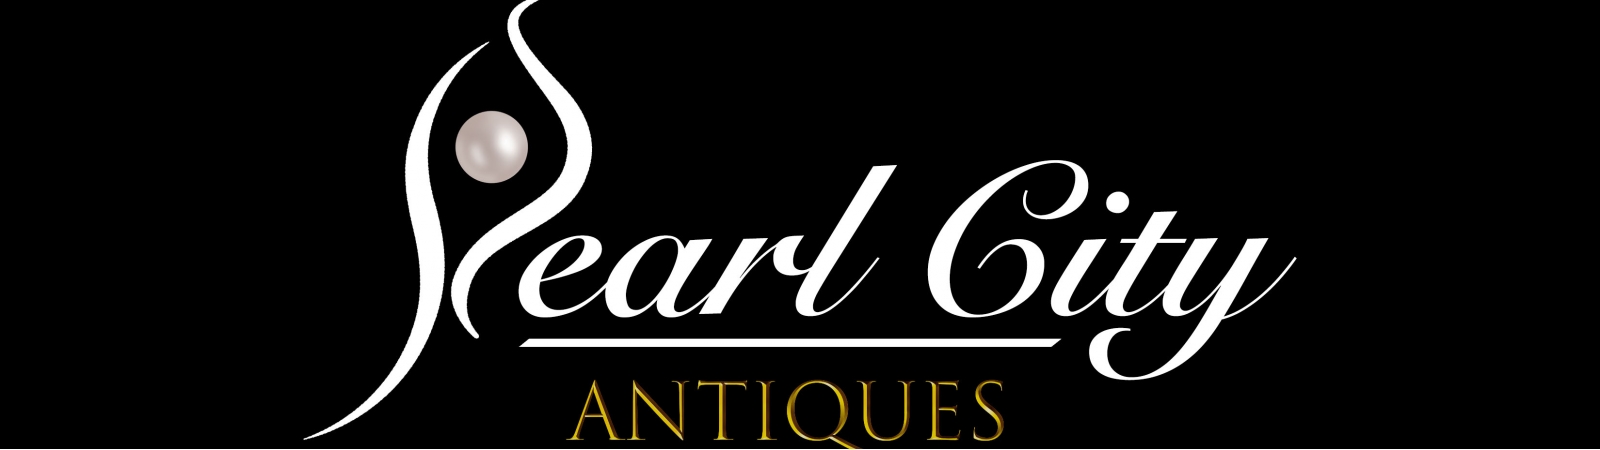 Pearl City Antiques | AuctionNinja